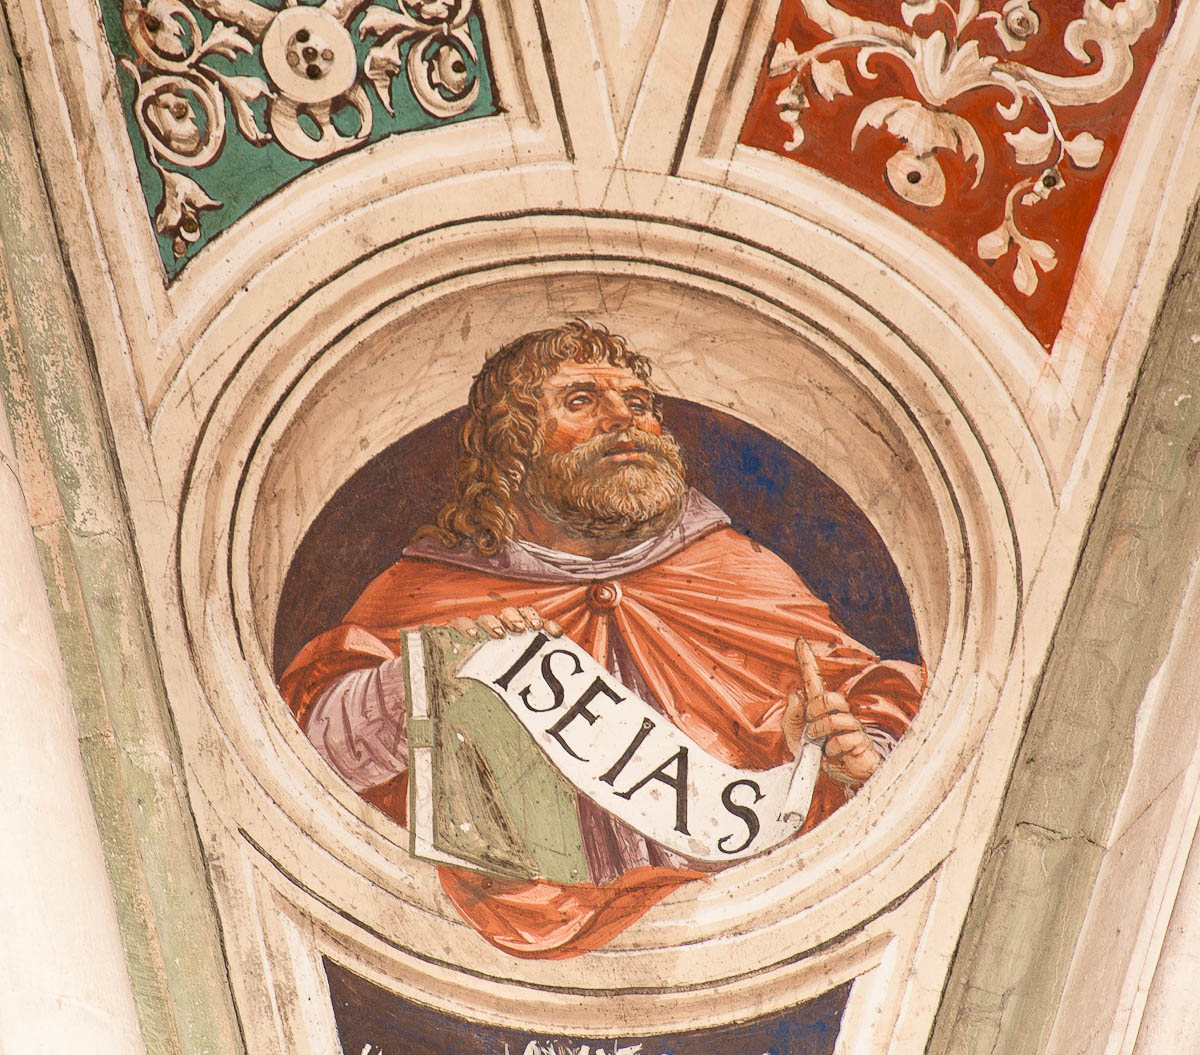 Isaia (dipinto murale, elemento d'insieme) di Bernardino di Stefano da Fossano detto Bergognone Bernardino (attribuito) (sec. XV)